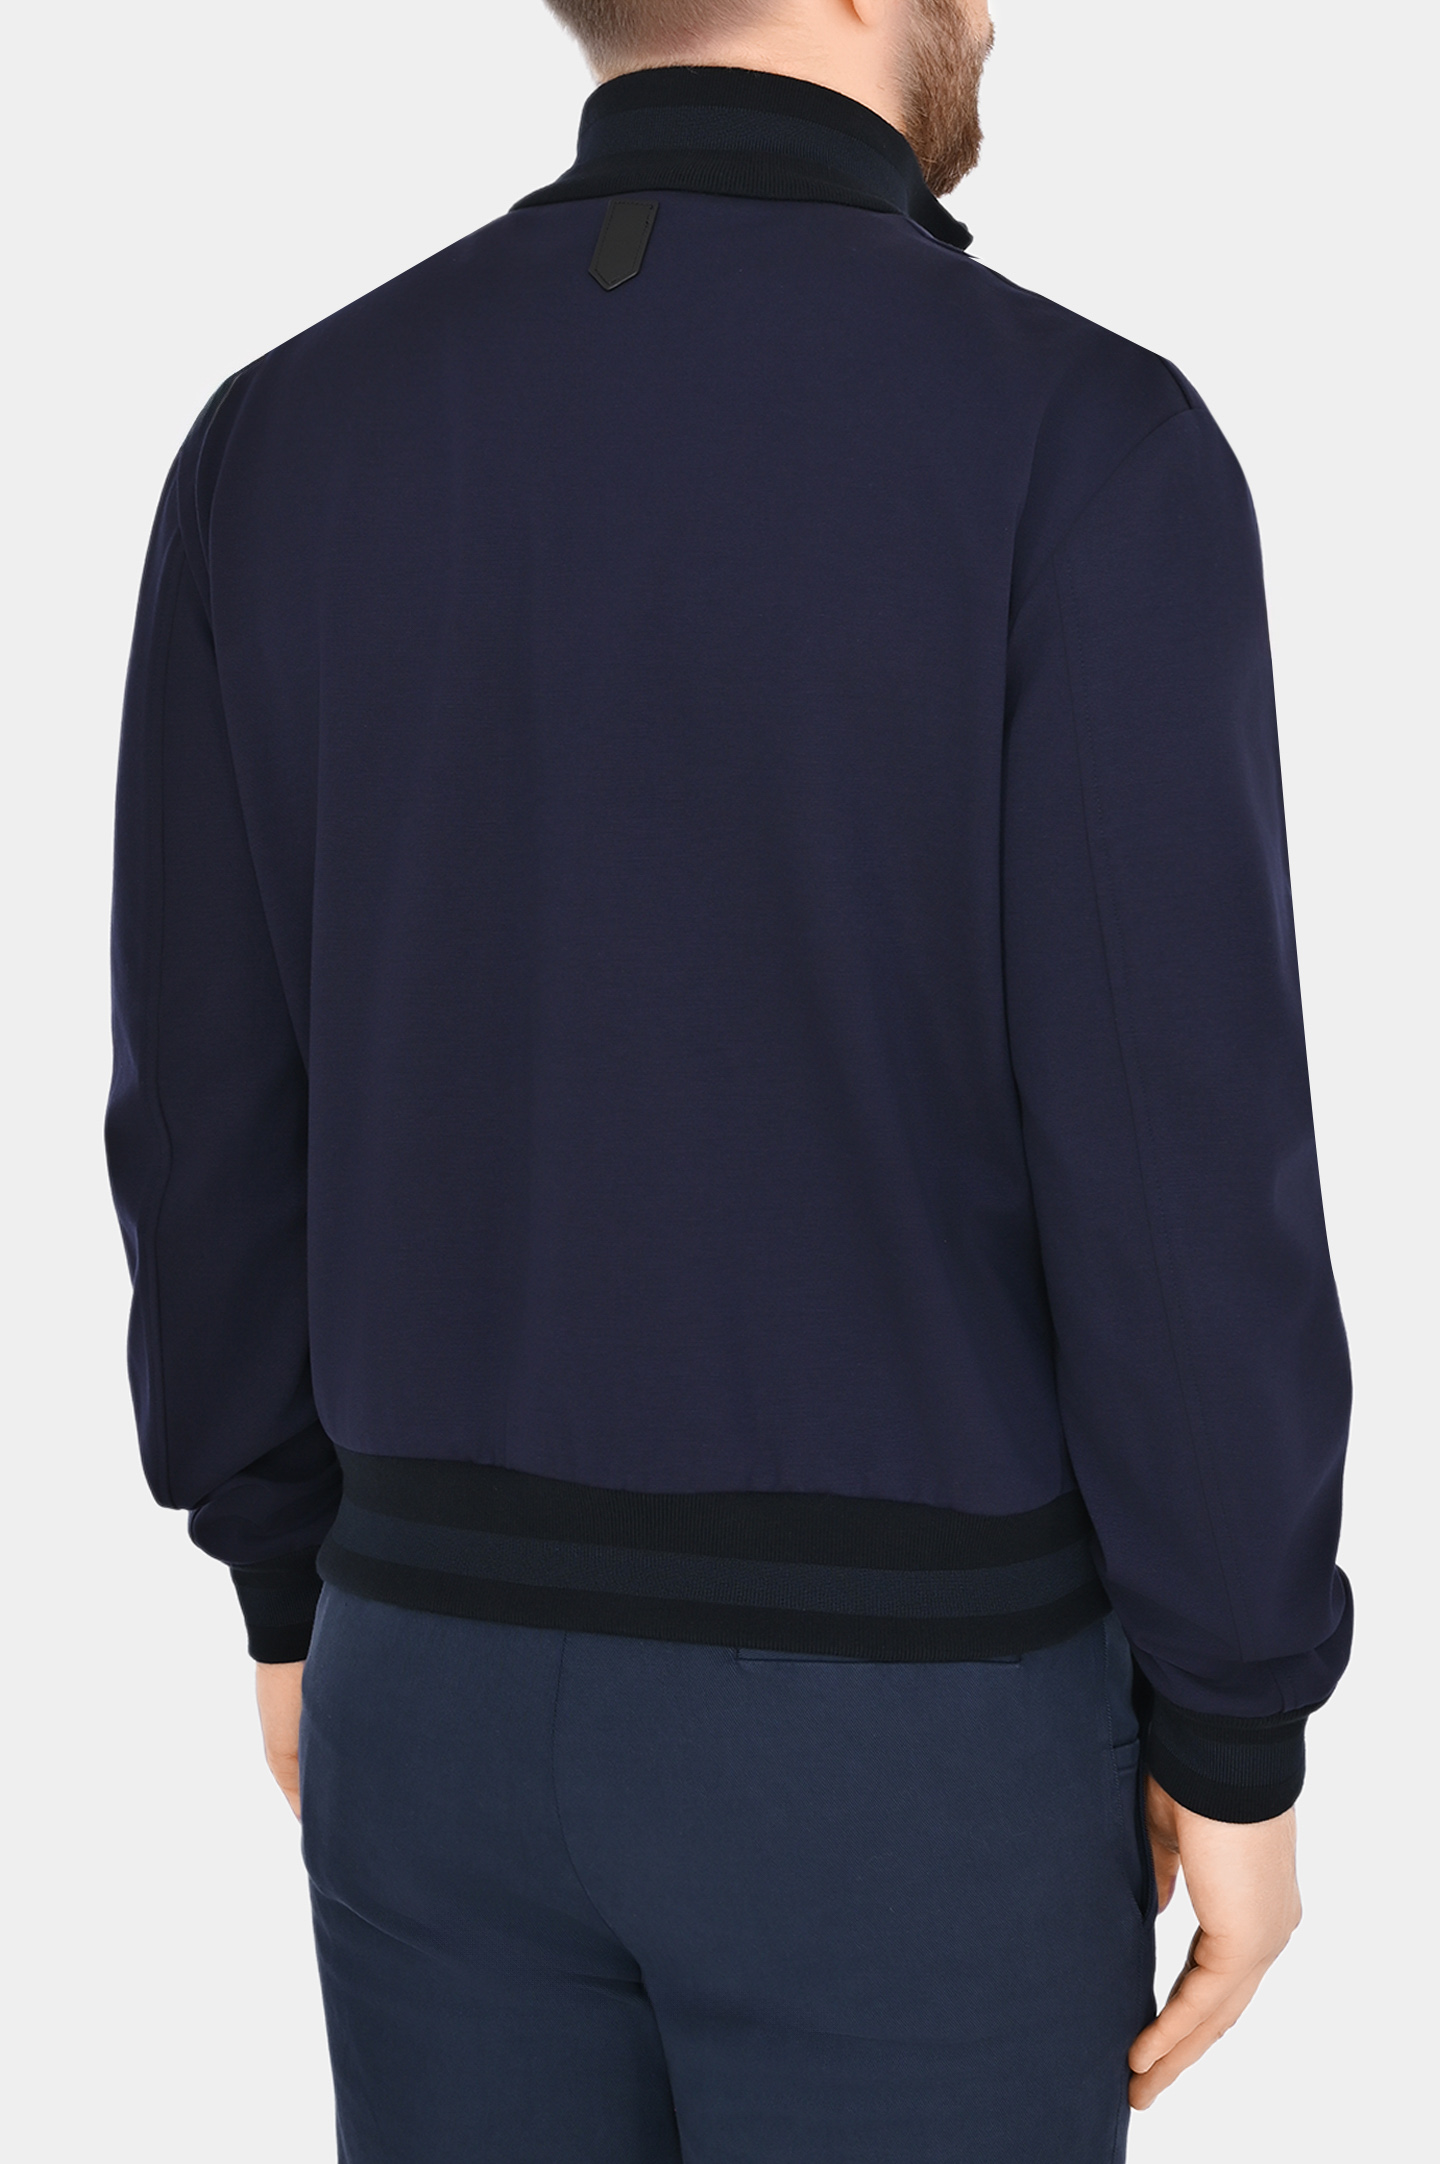 Куртка с карманами CANALI SG02940 O40892, цвет: Темно-синий, Мужской